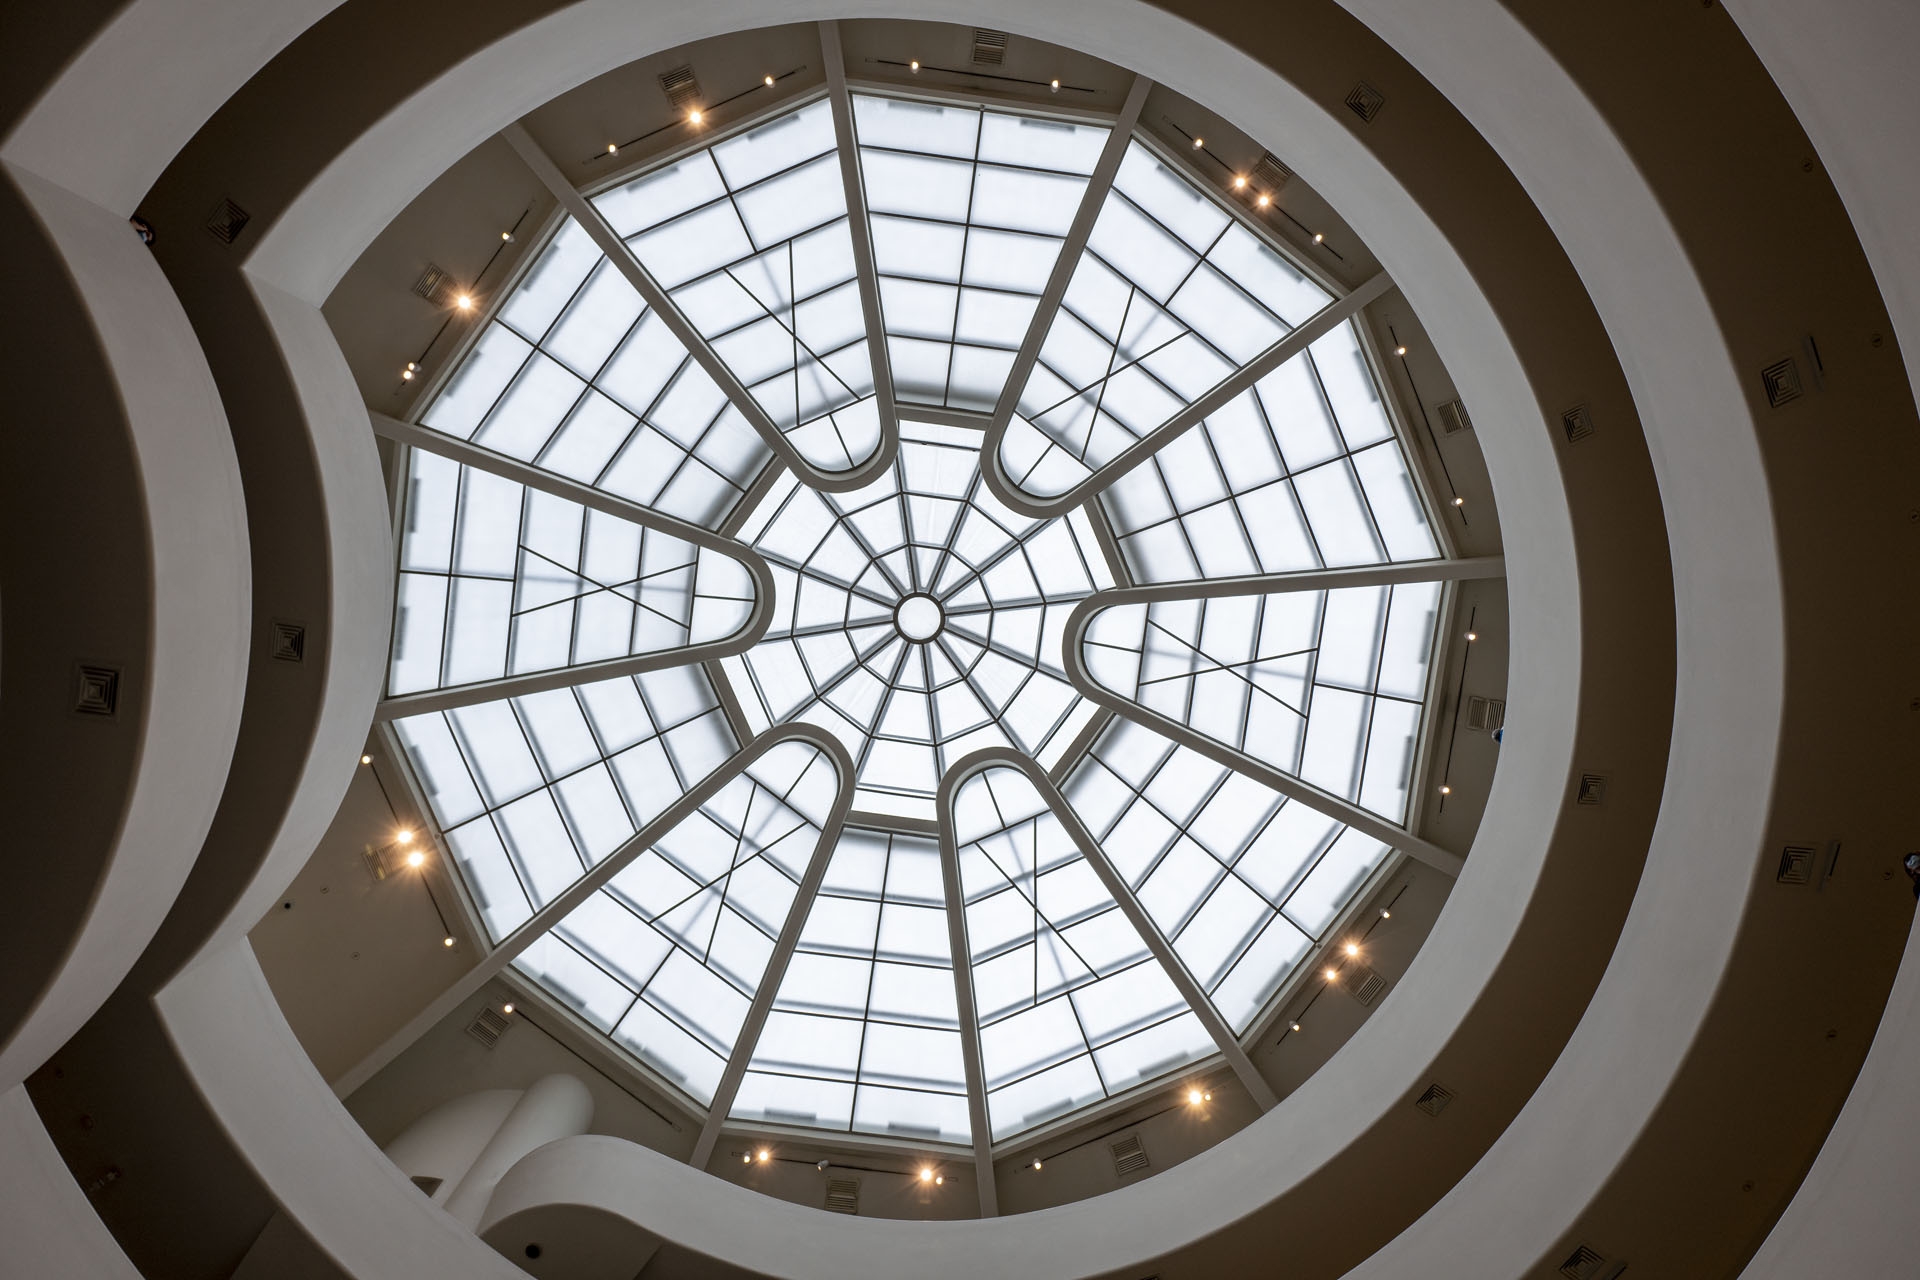 Glasdach des Guggenheim Museums in New York